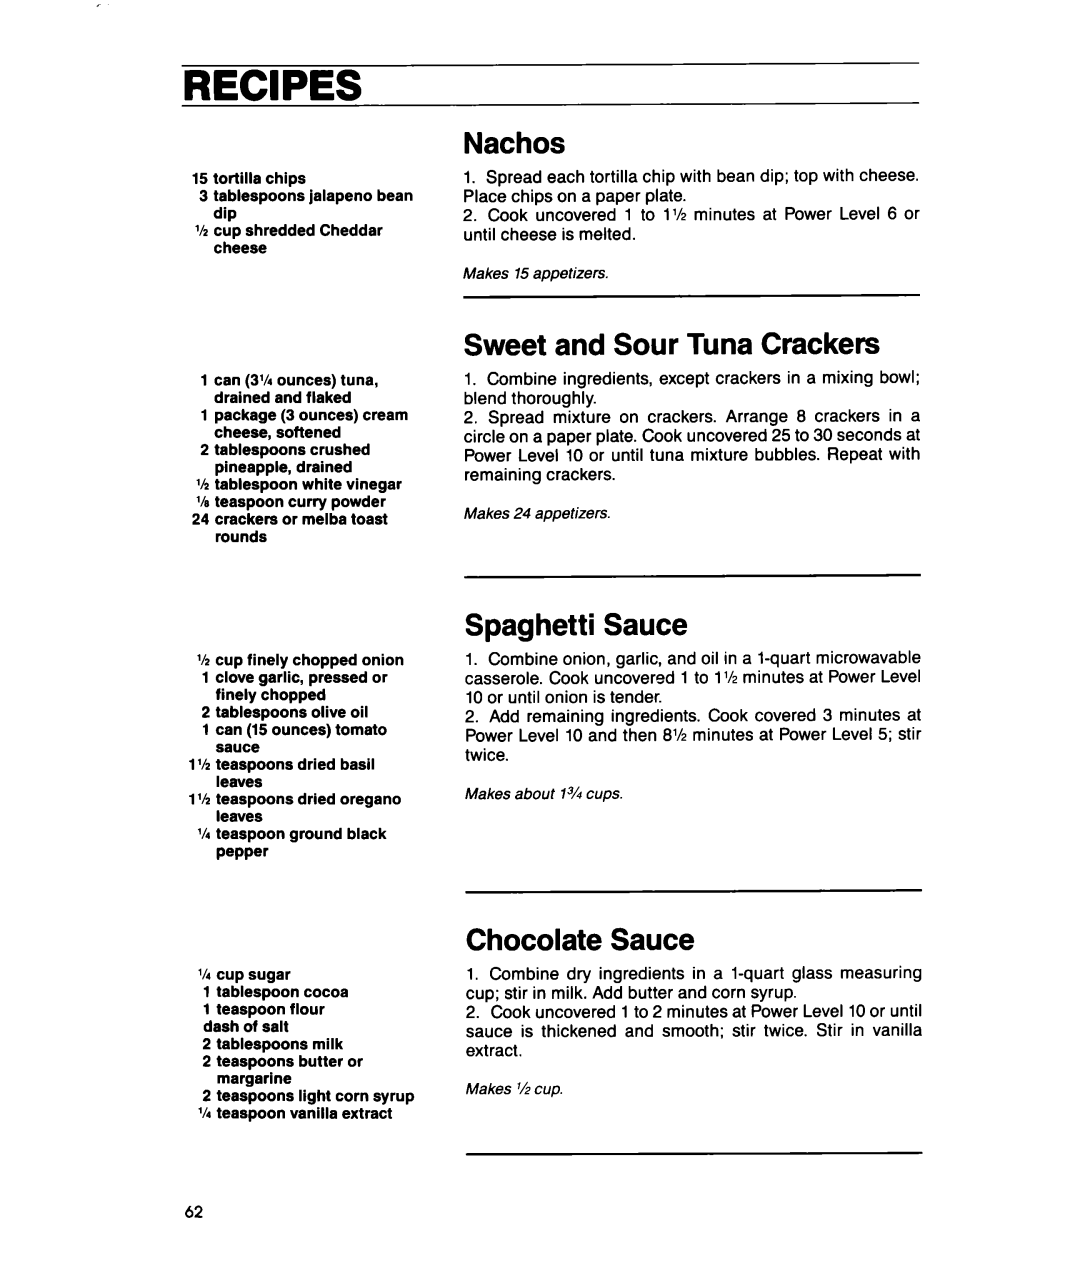 Whirlpool MTZ080XY user manual Recipes, Nachos, Sweet and Sour Tuna Crackers, Spaghetti Sauce, Chocolate Sauce 